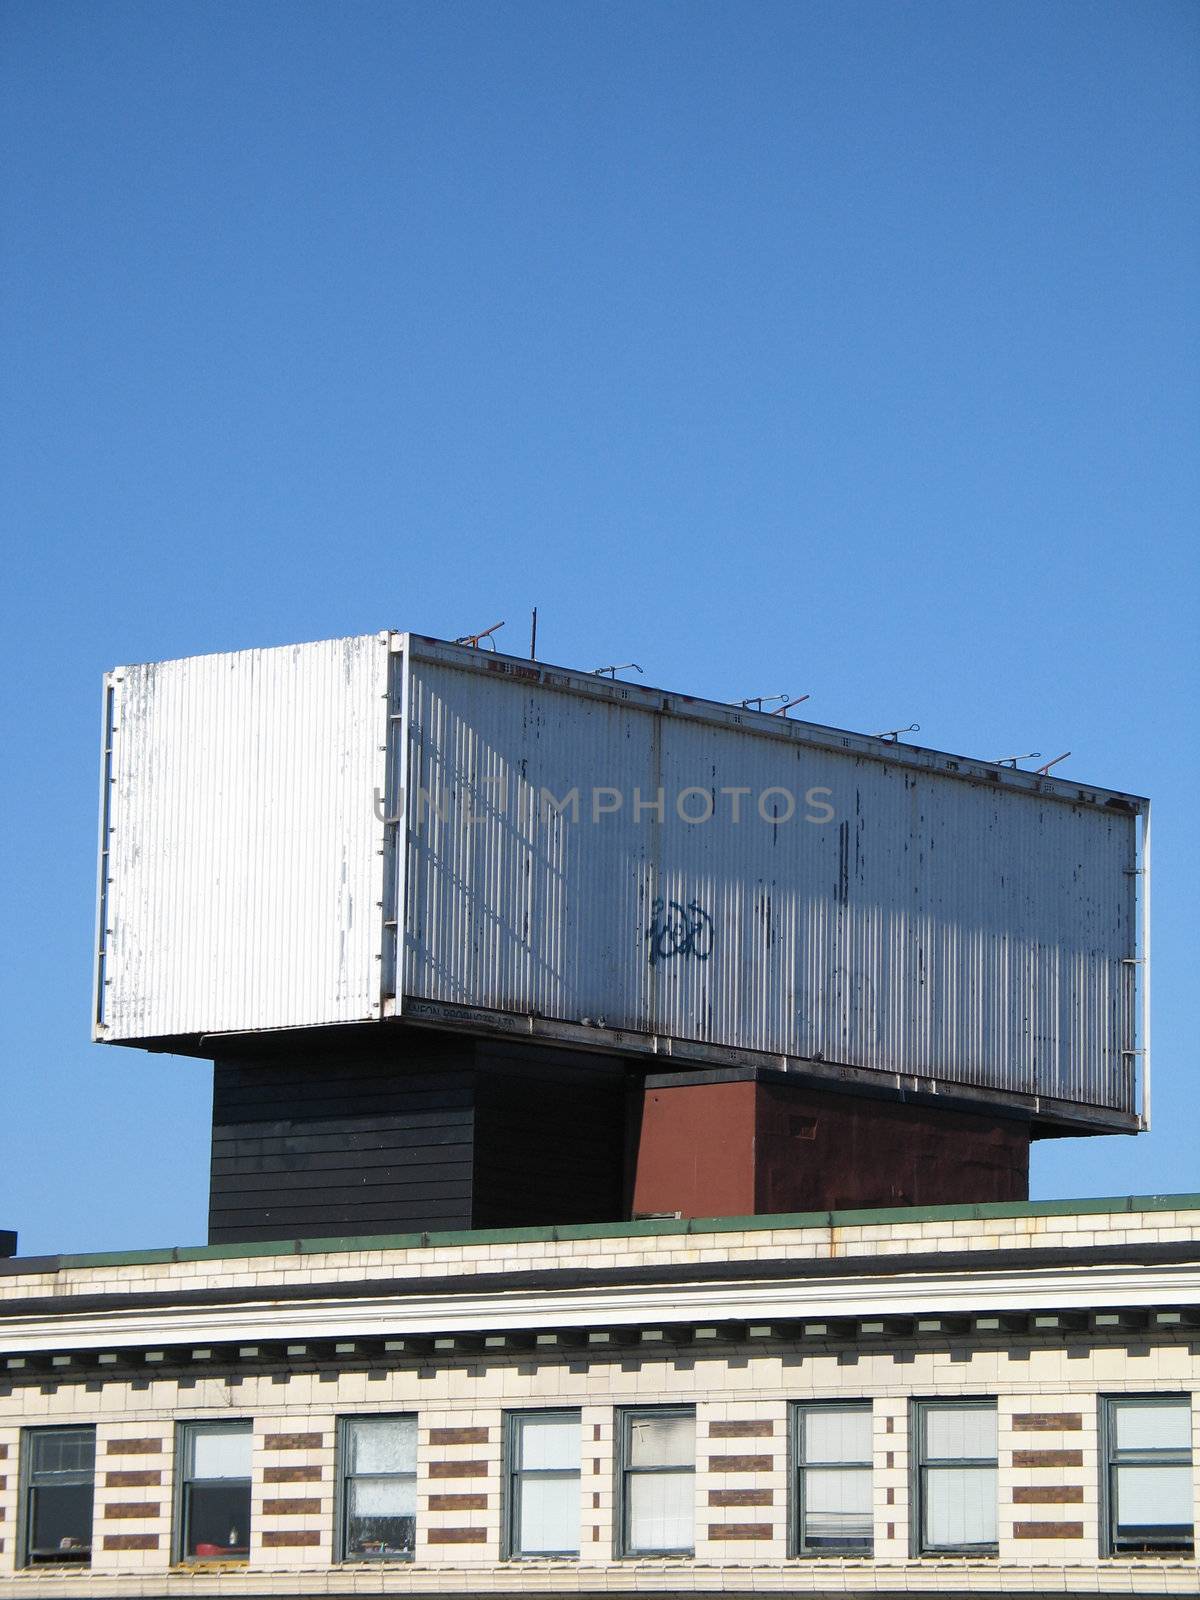 empty billboard